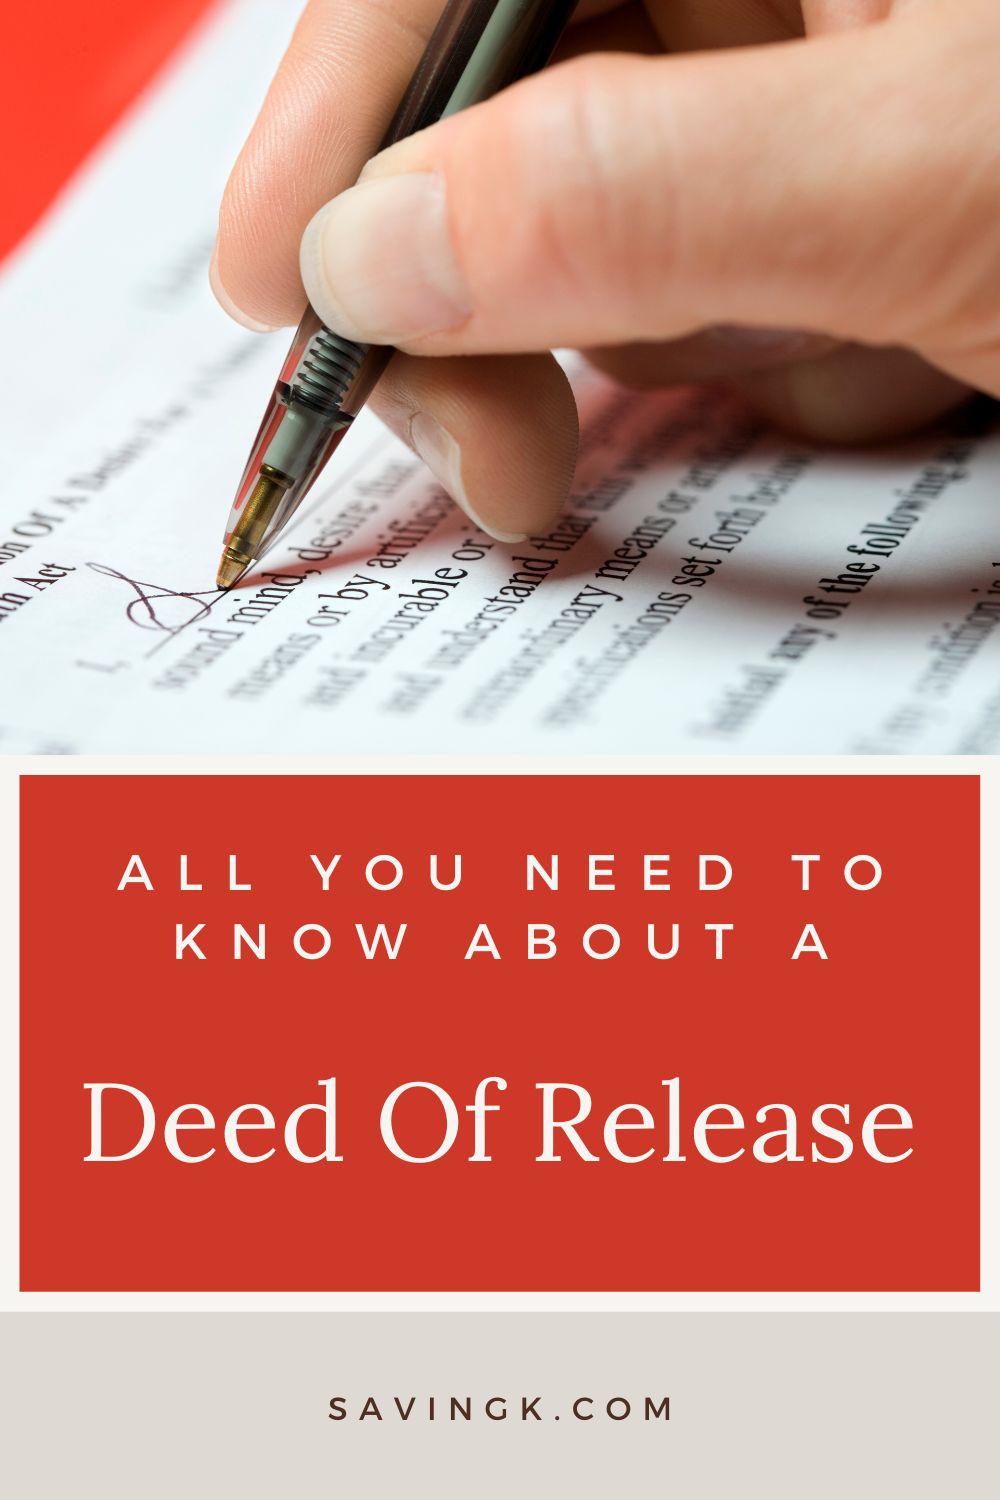 Deed Of Release(